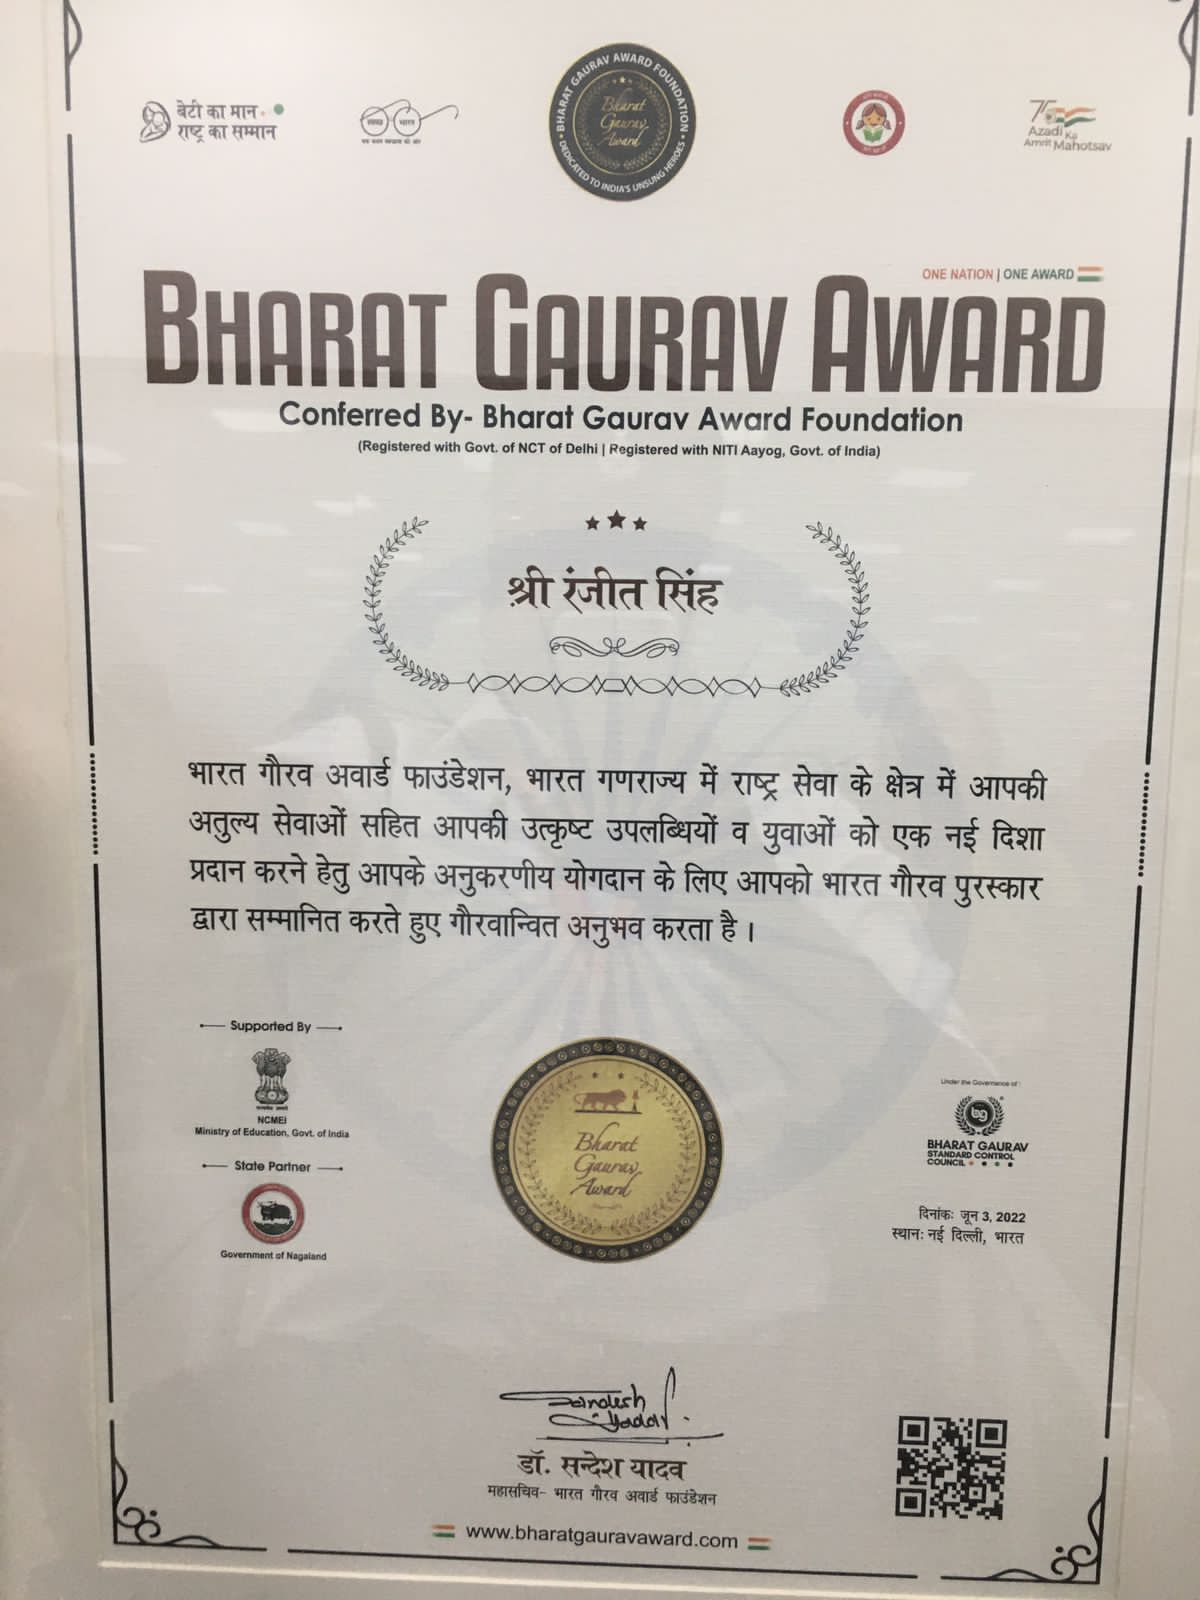 Bharat Gaurav Award to Ranjit Singh